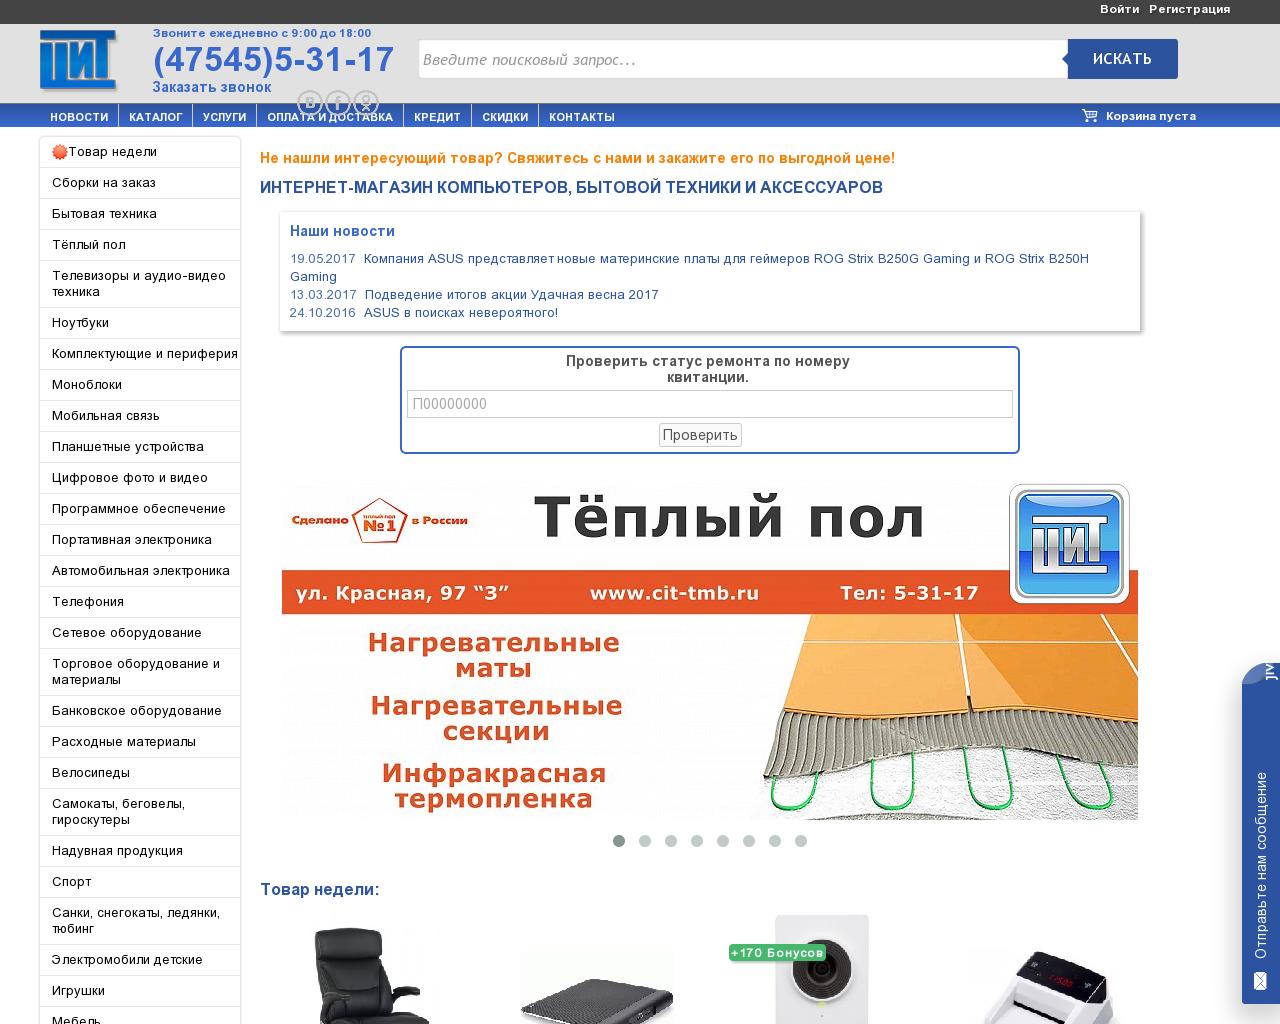 Изображение сайта cit-tmb.ru в разрешении 1280x1024